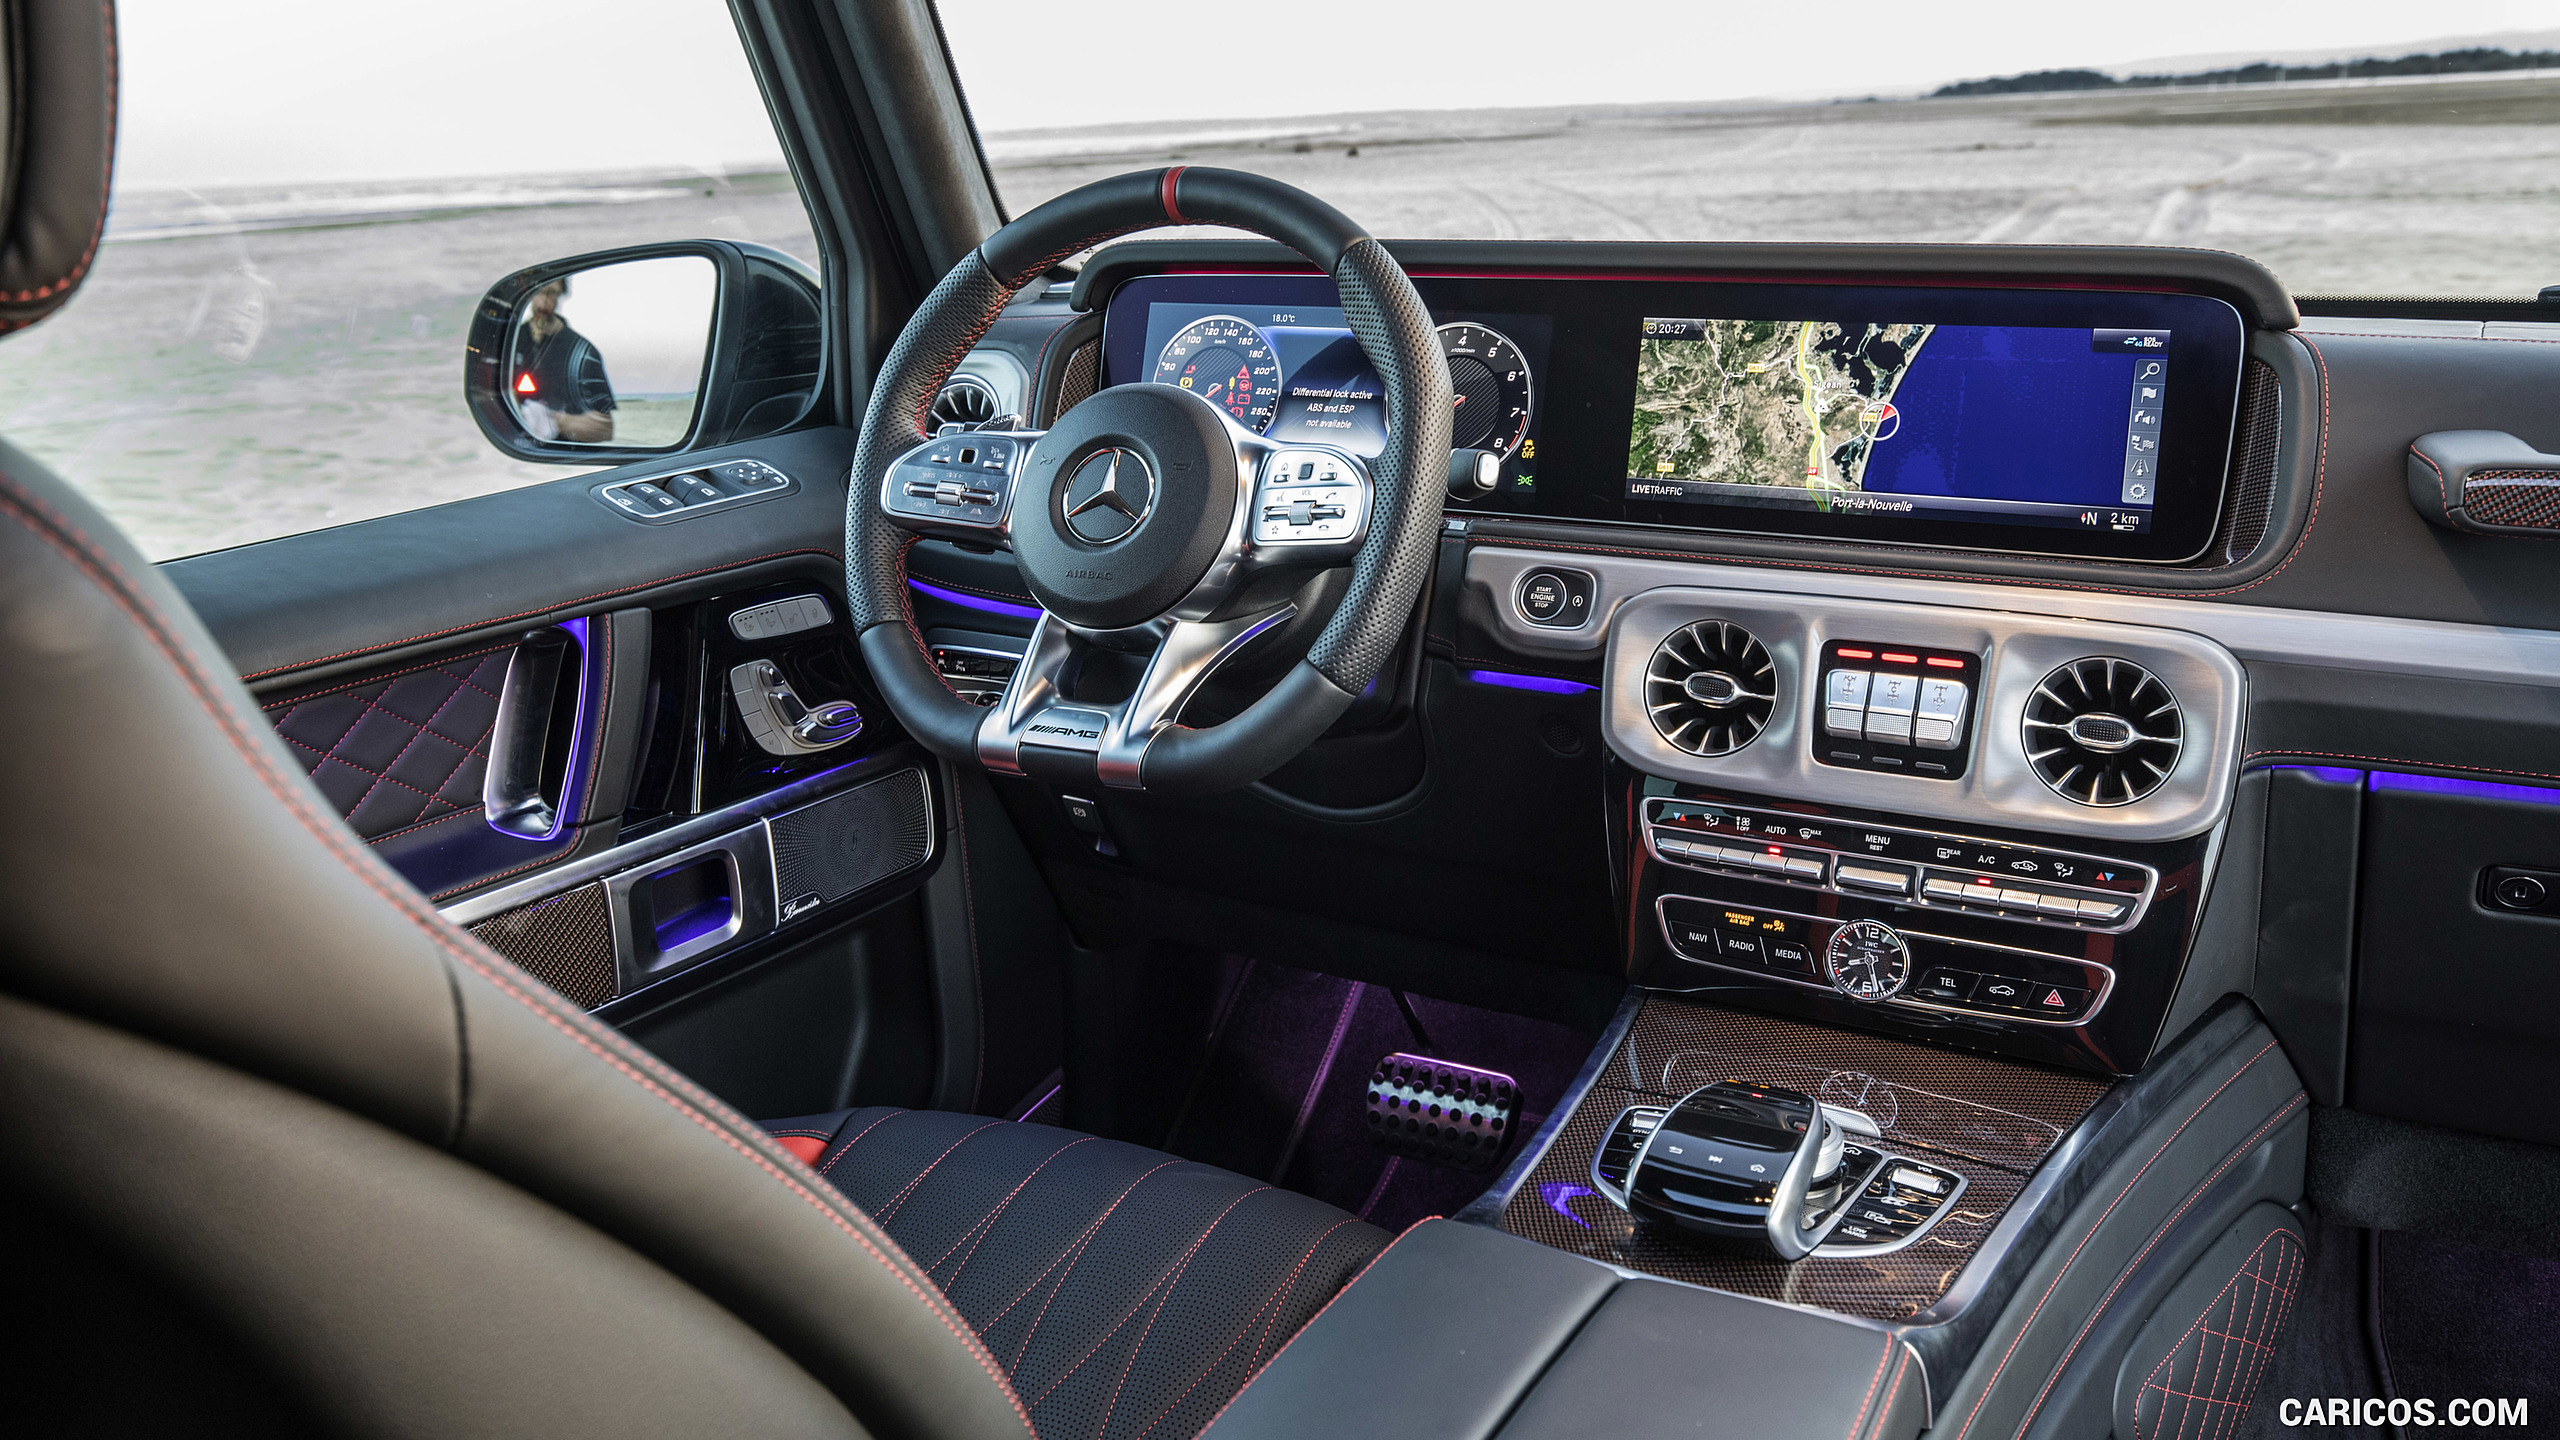 2019 Mercedes-AMG G63 - Interior, #192 of 452